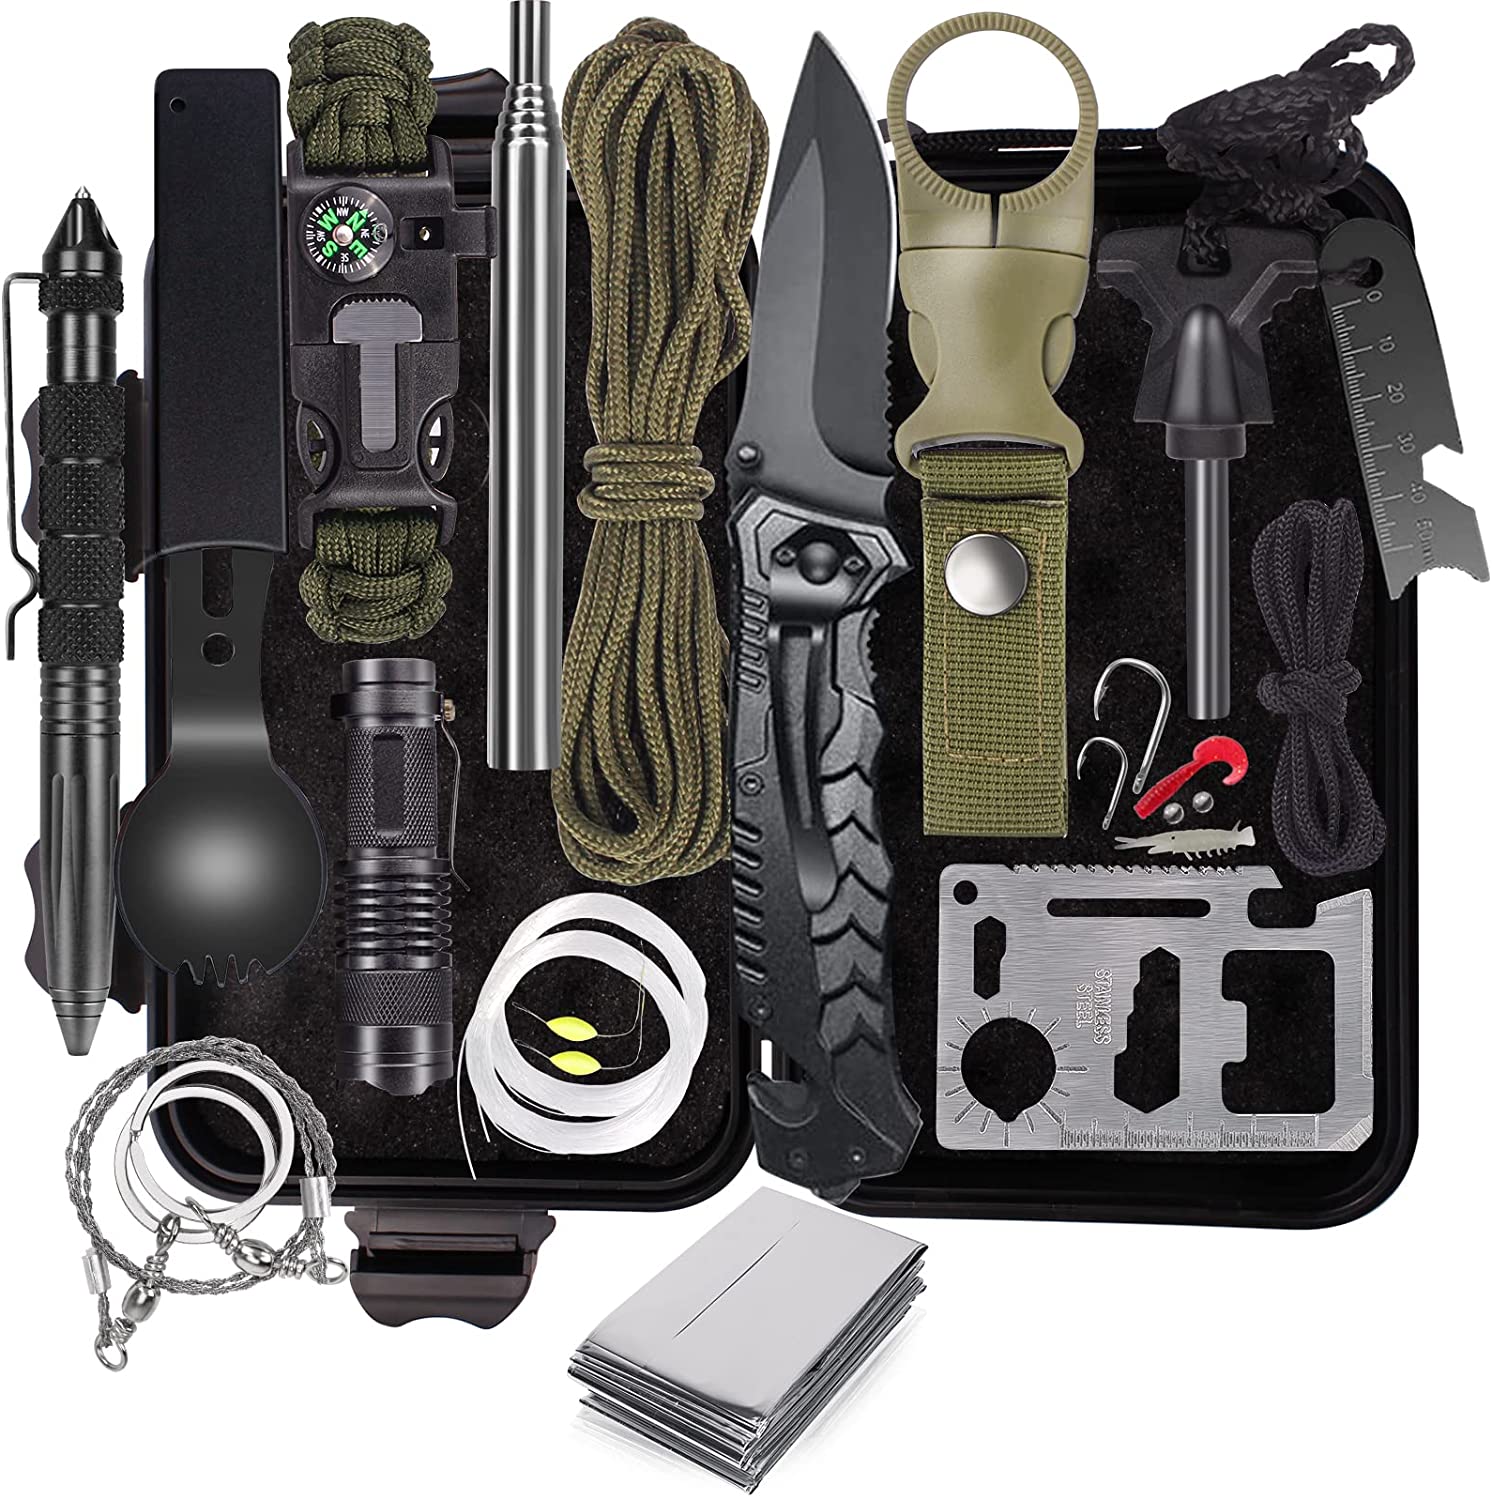 Kosin Survival Gear Emergency Survival Kit